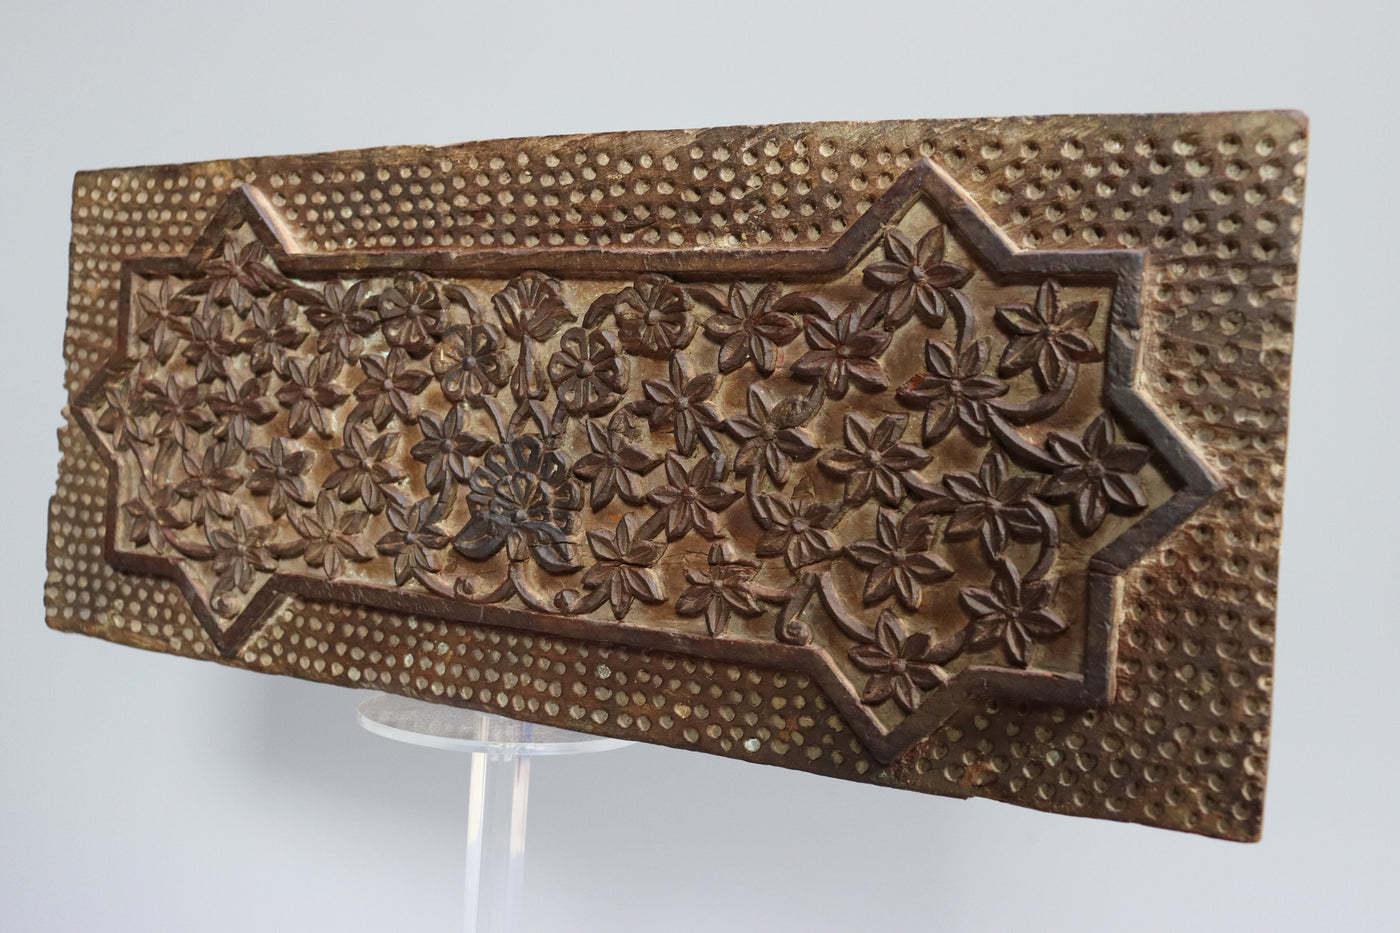 48 cm x 20 cm antik orient handgeschnitzte islamische Massiv Holz  Afghanistan Nuristan Panel Pakistan Swat-Valley 18/19 Jh. Nr:22/11  Orientsbazar   